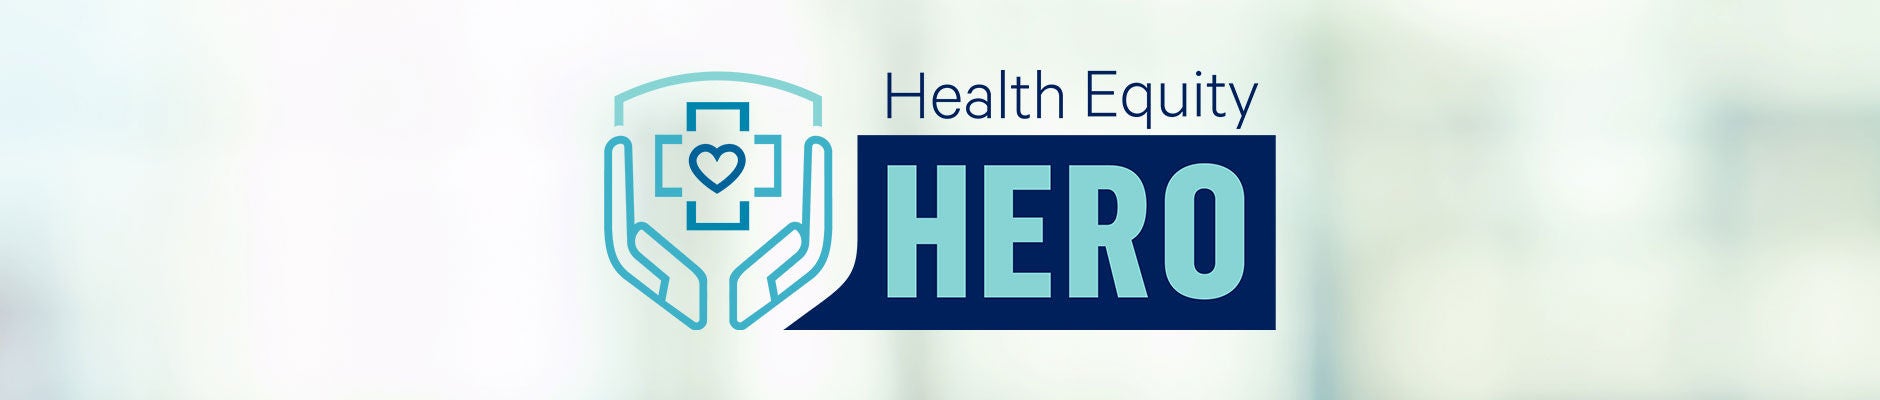 Health Equity Hero Logo image banner